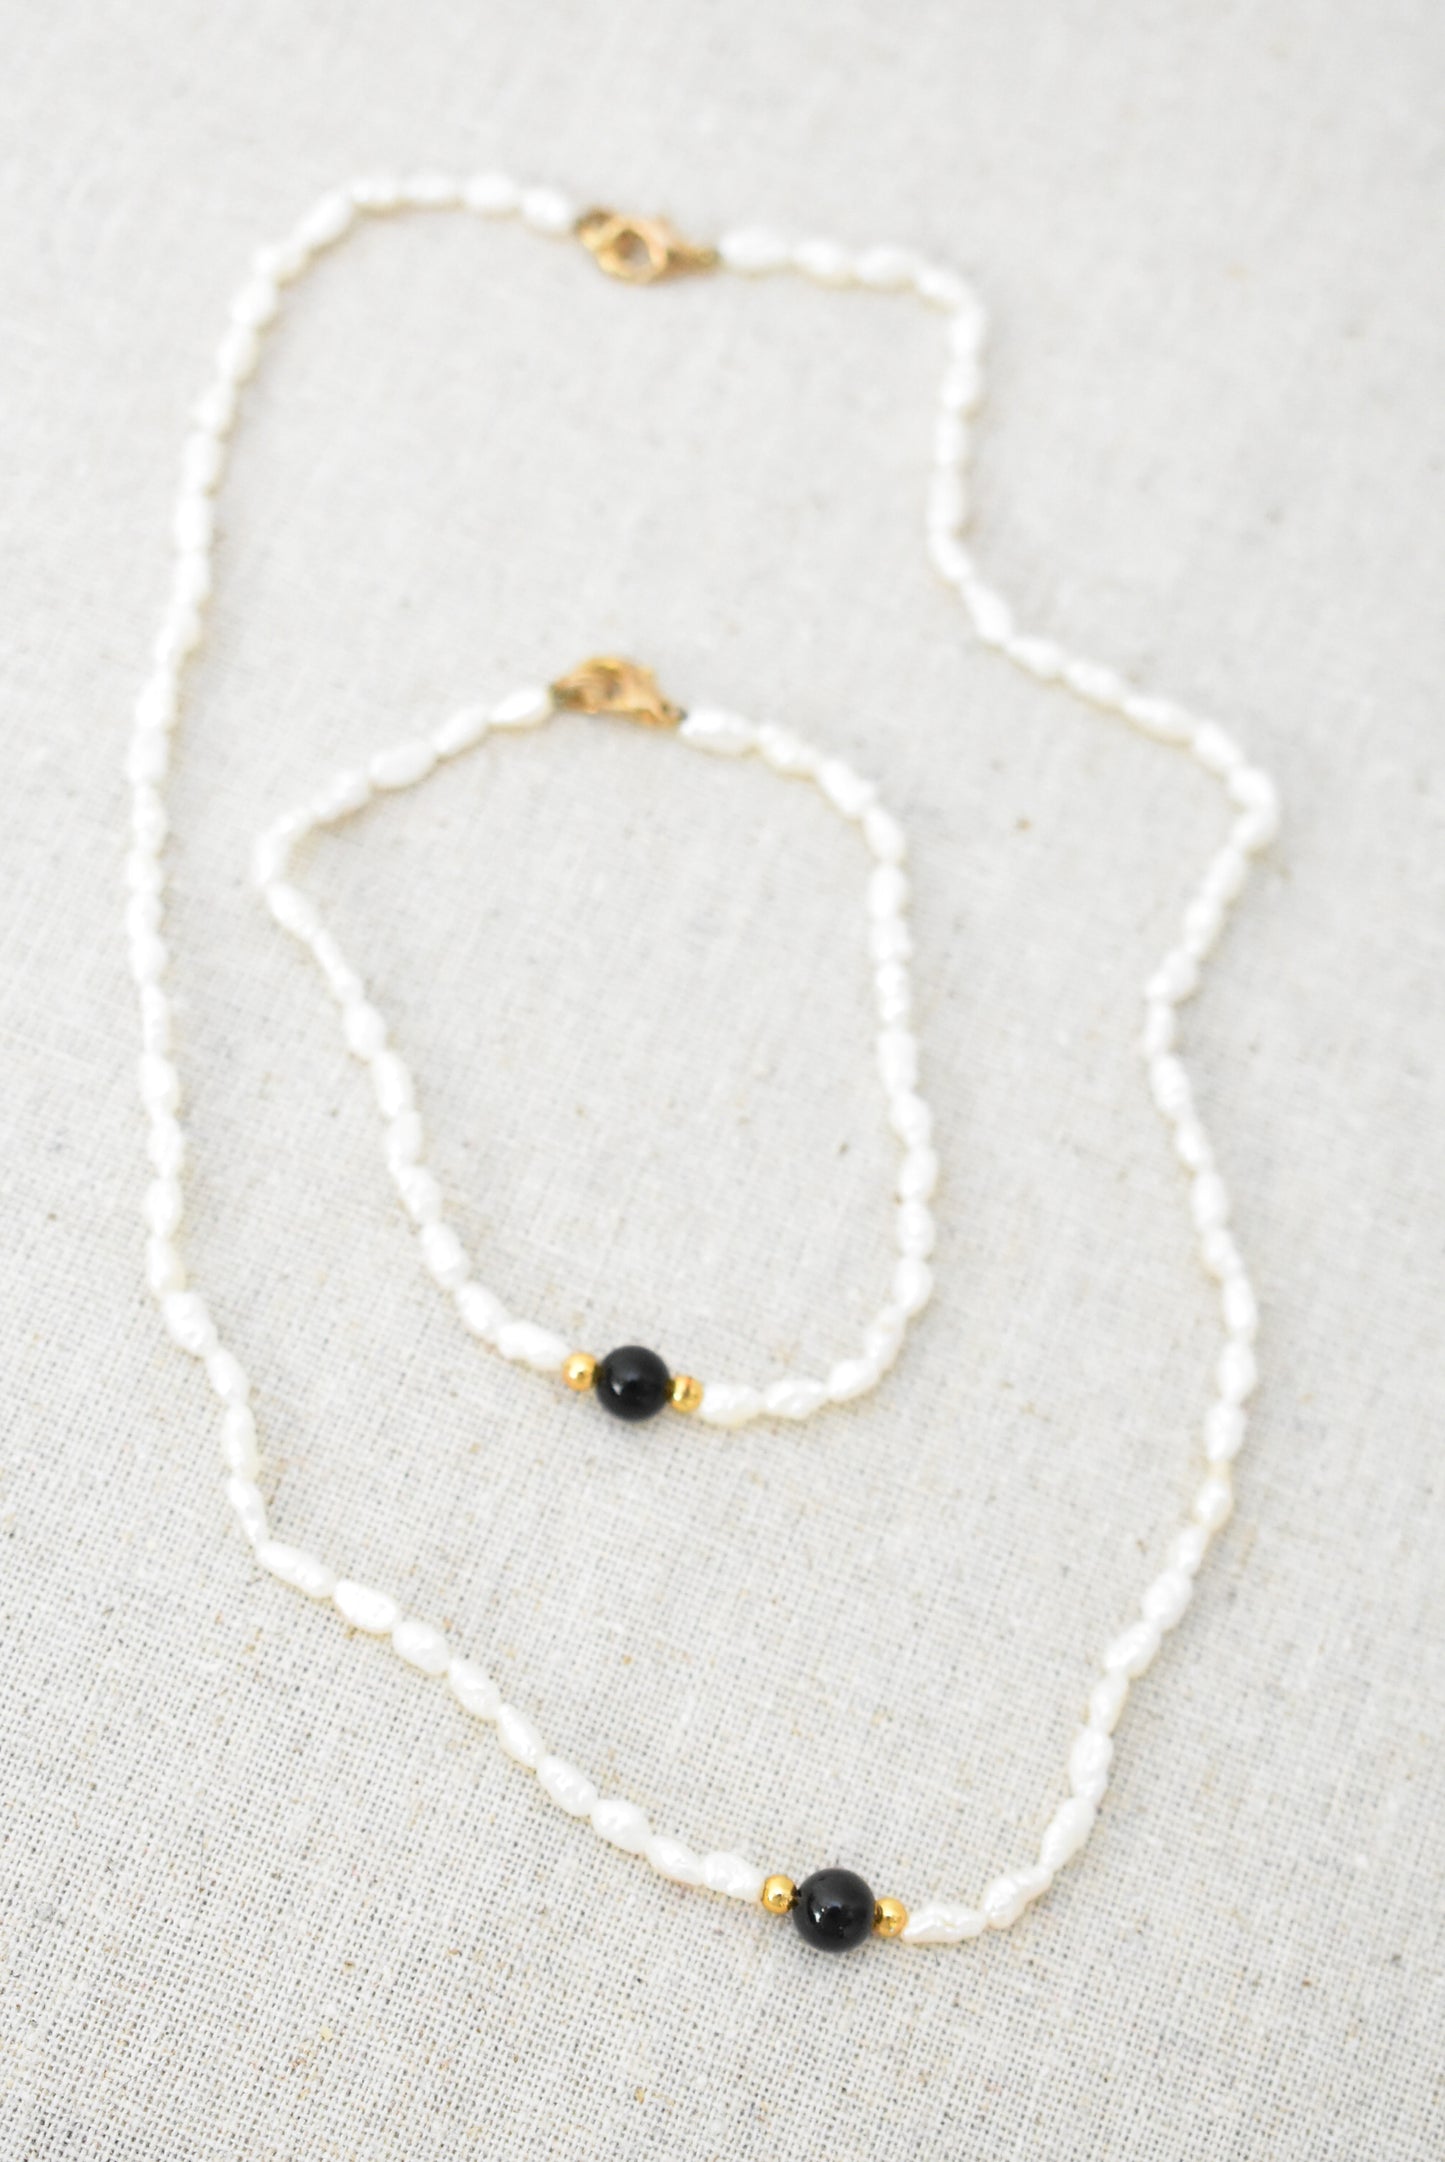 Pearl necklace & bracelet set